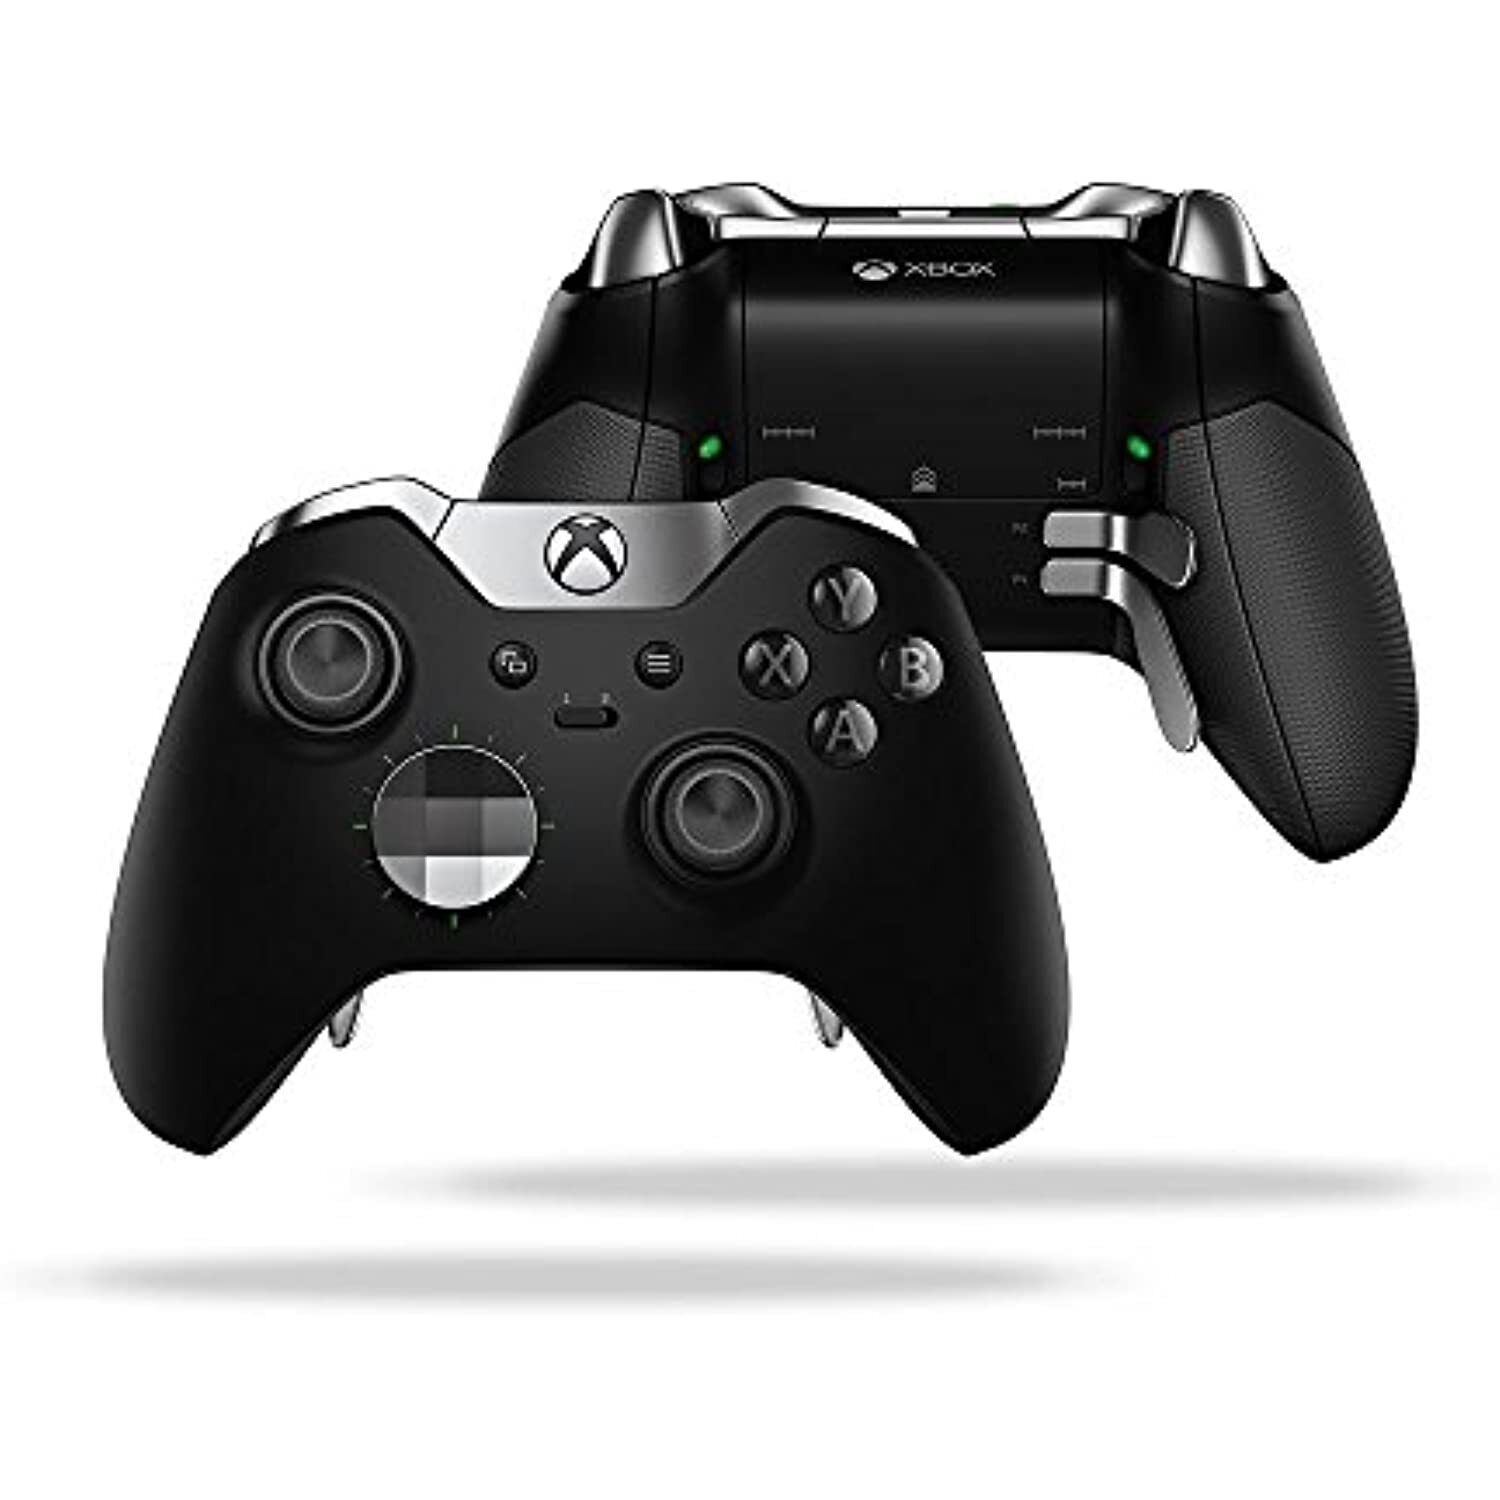 Microsoft Xbox Elite Wireless Controller - Black (HM3-00001) for 